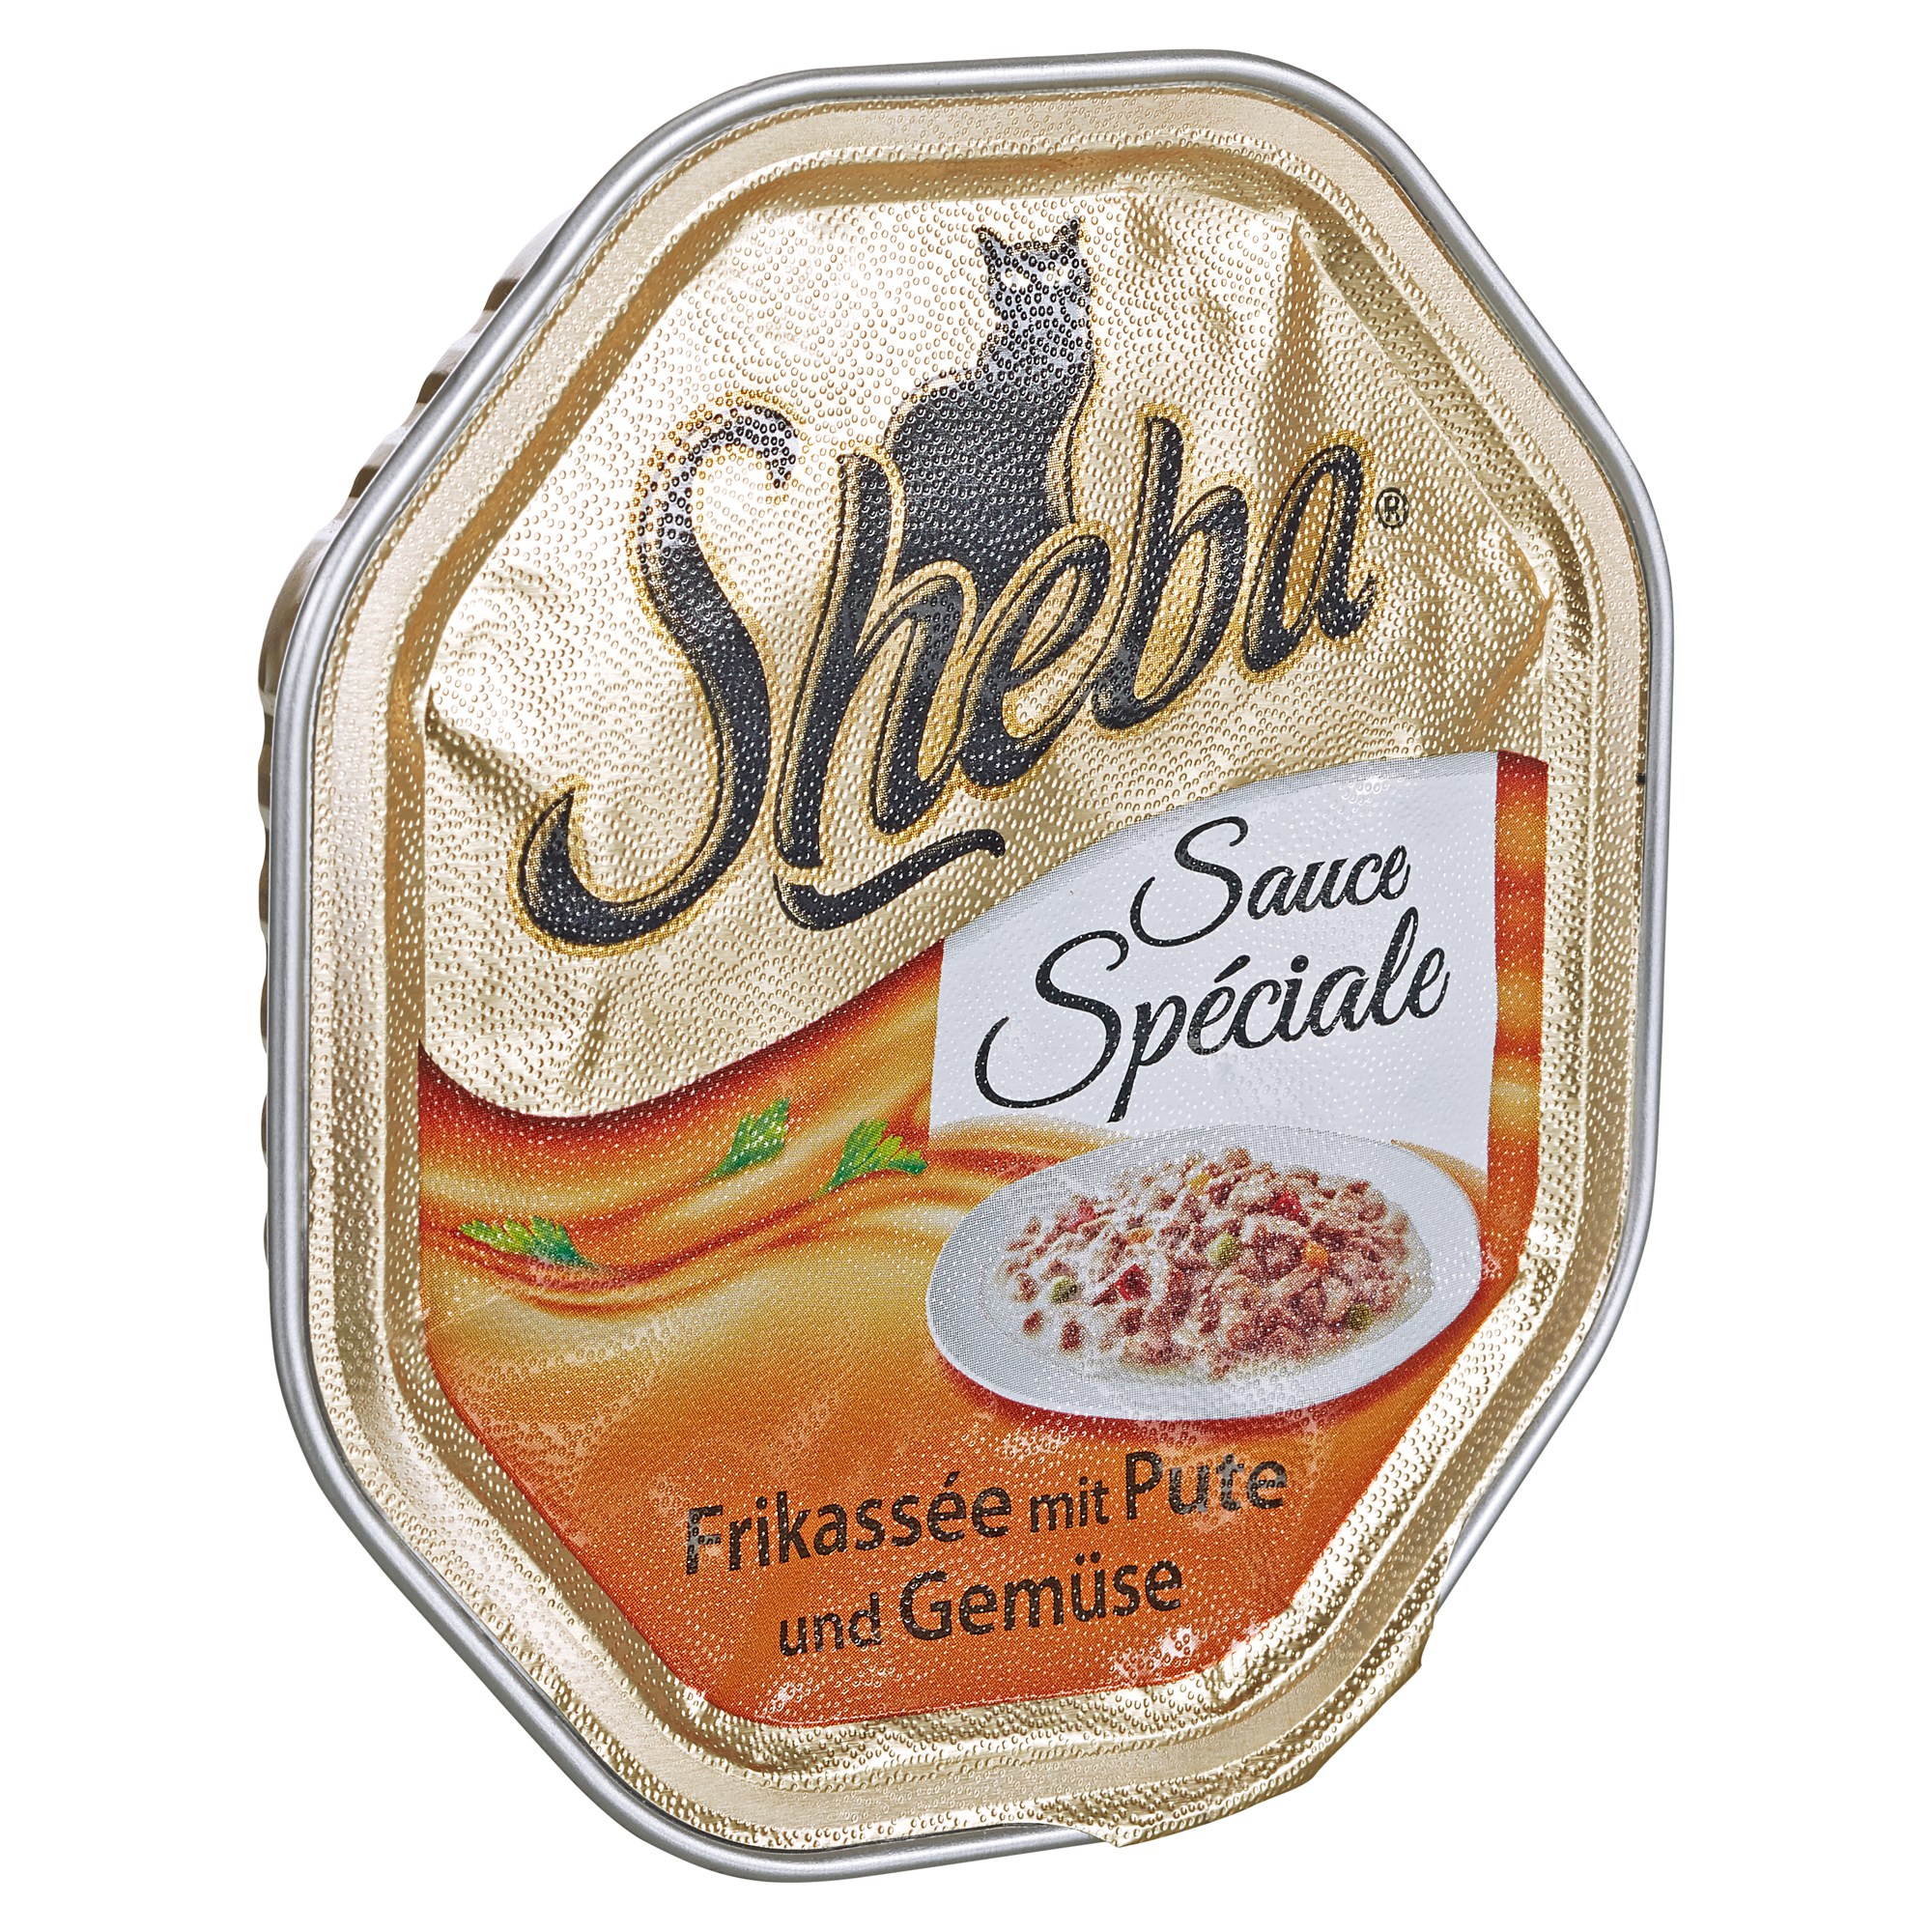 Katzennassfutter "Sauce Spéciale" Frikassée mit Pute und Gemüse 85 g + product picture